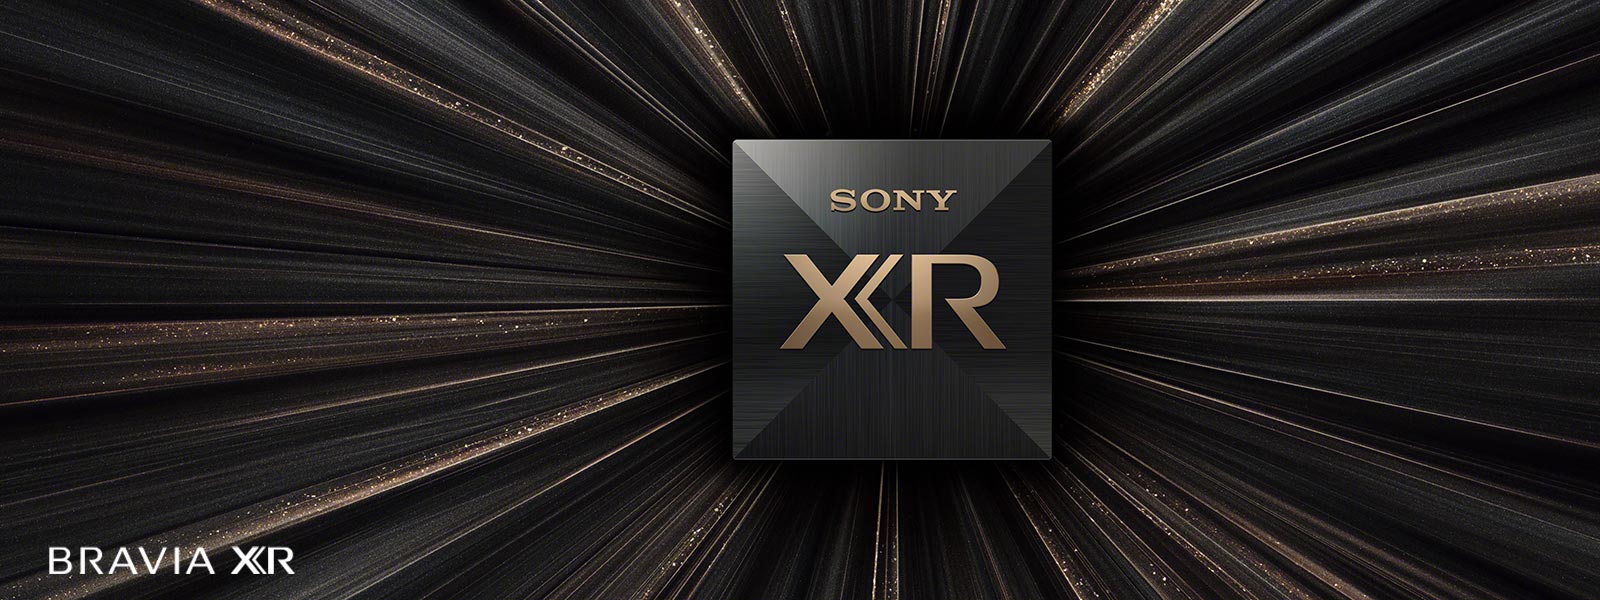 پردازشگر Cognitive Processor XR وظیفه پردازش تصویر XR Picture و صدا XR Sound را دارد